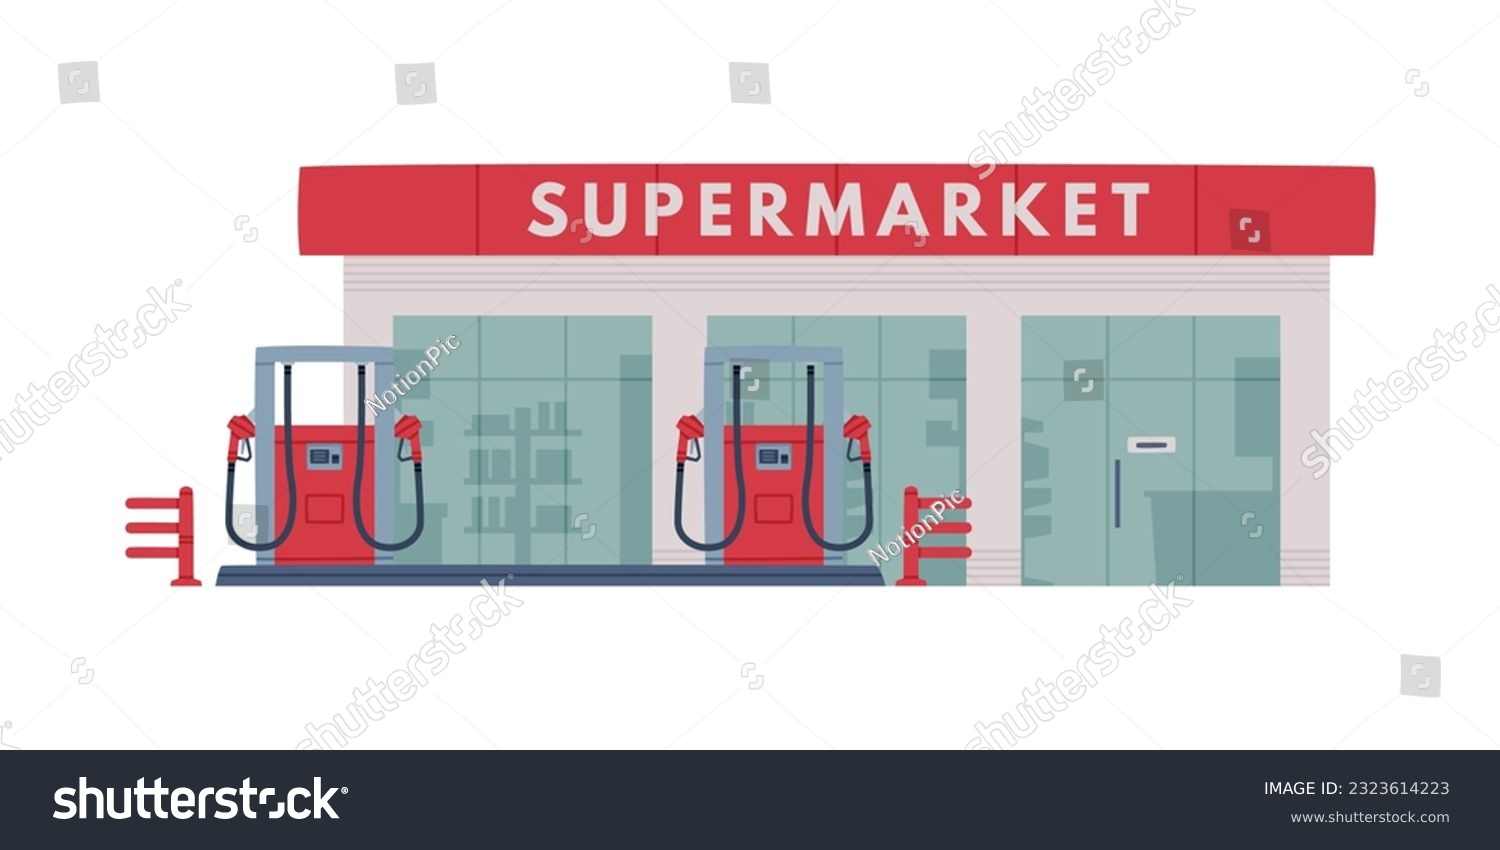 SVG of Gas Filling Station Supermarket Building as Facility Selling Fuel for Motor Vehicle Vector Illustration svg